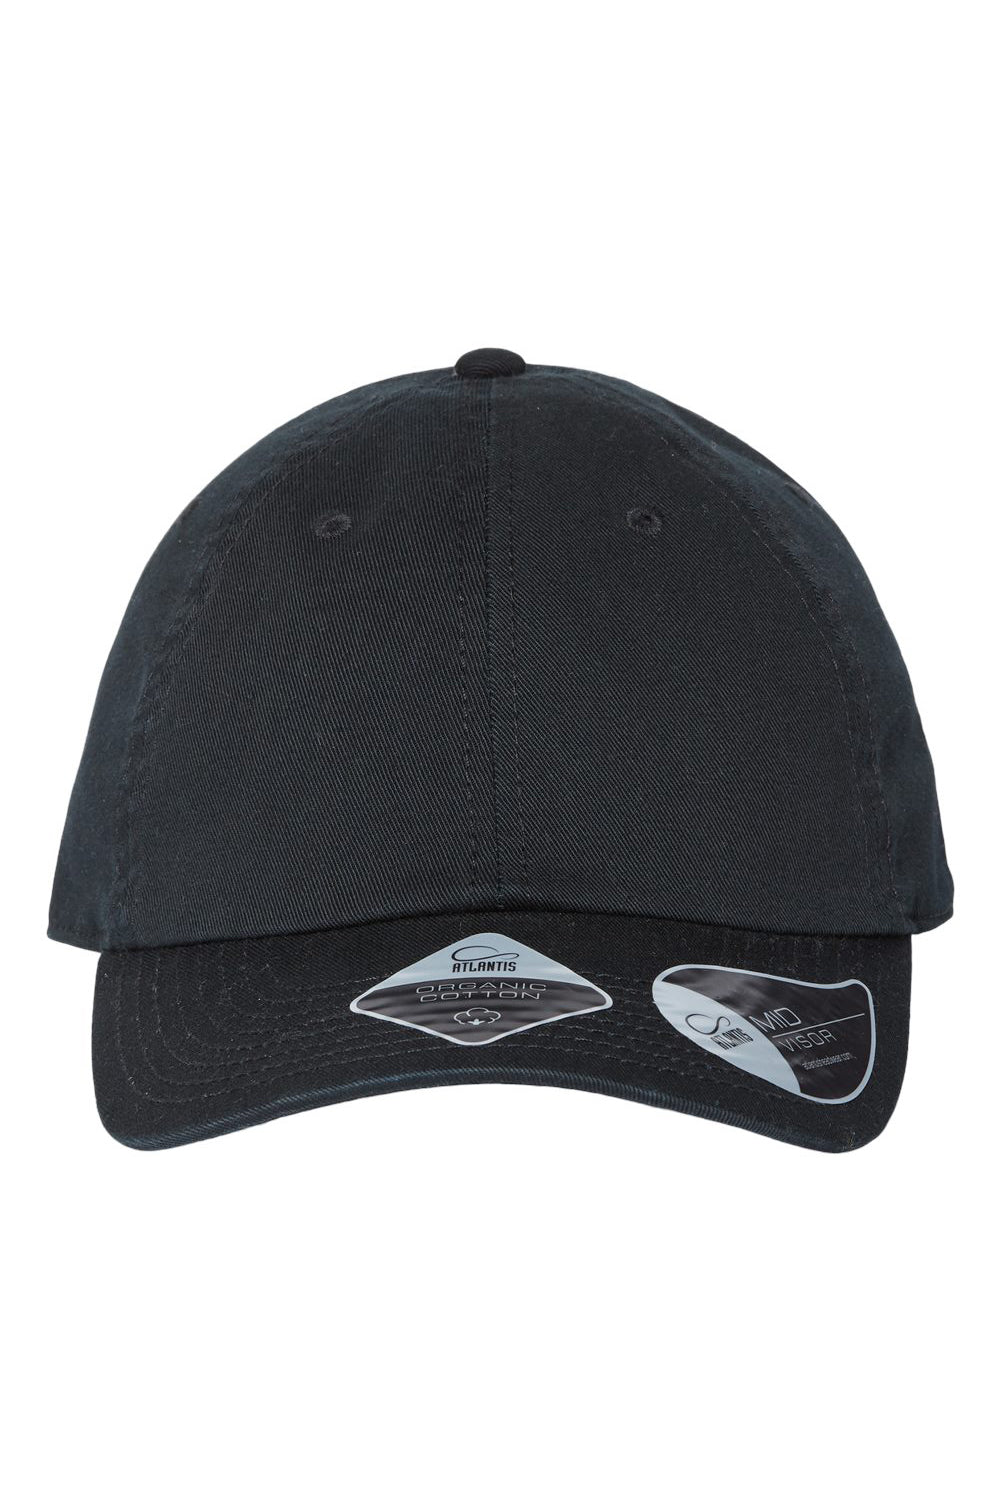 Atlantis Headwear FRASER Mens Sustainable Adjustable Dad Hat Black Flat Front